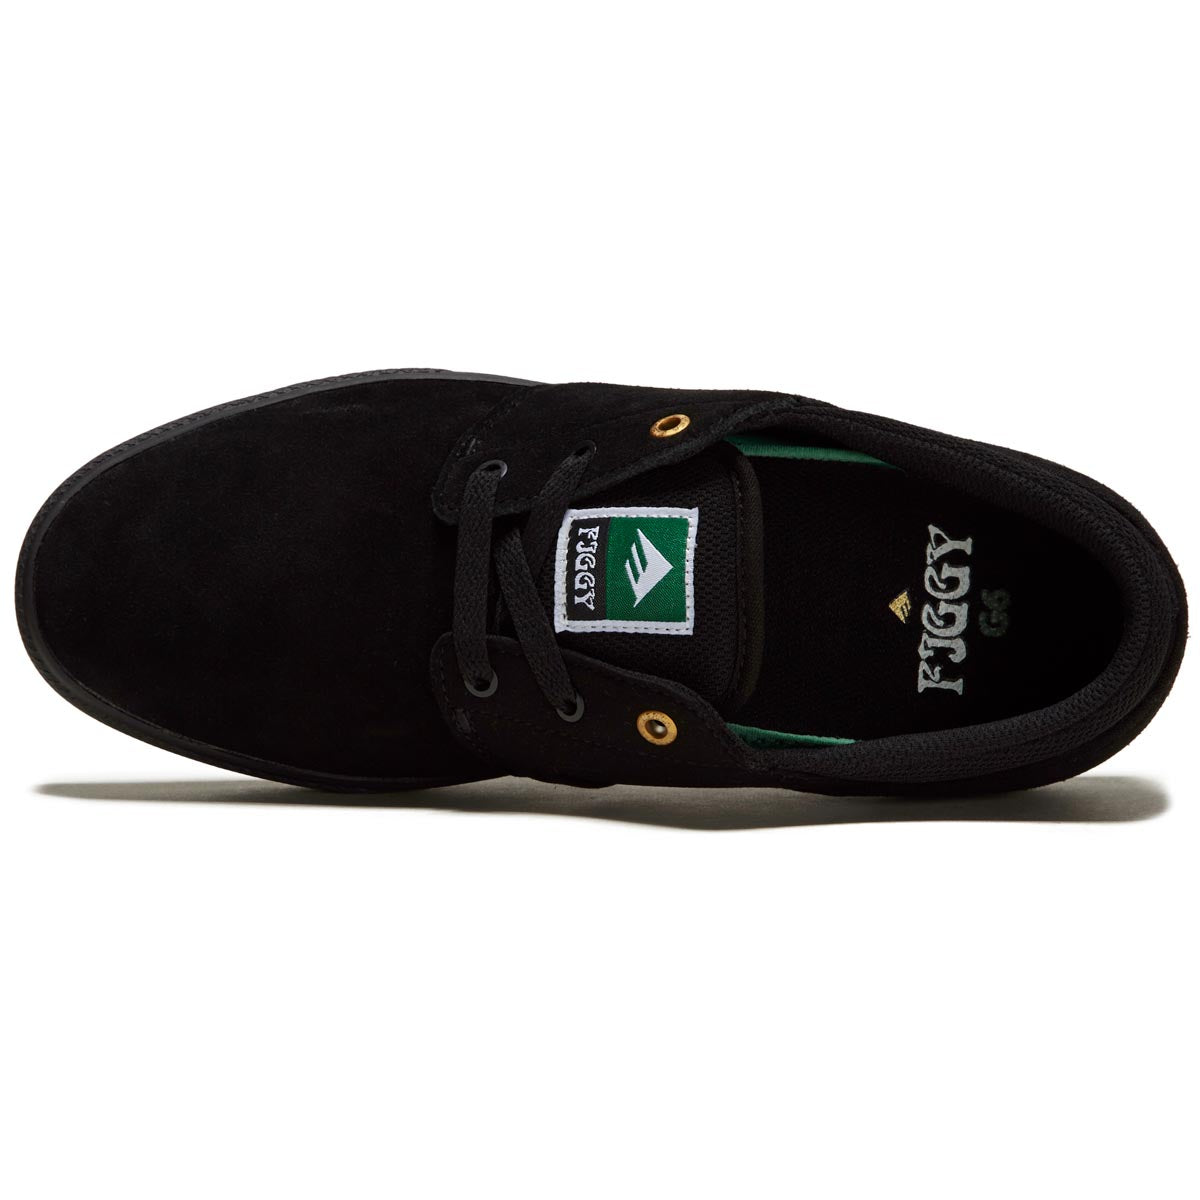 Emerica Figgy G6 Shoes - Black/Black image 3